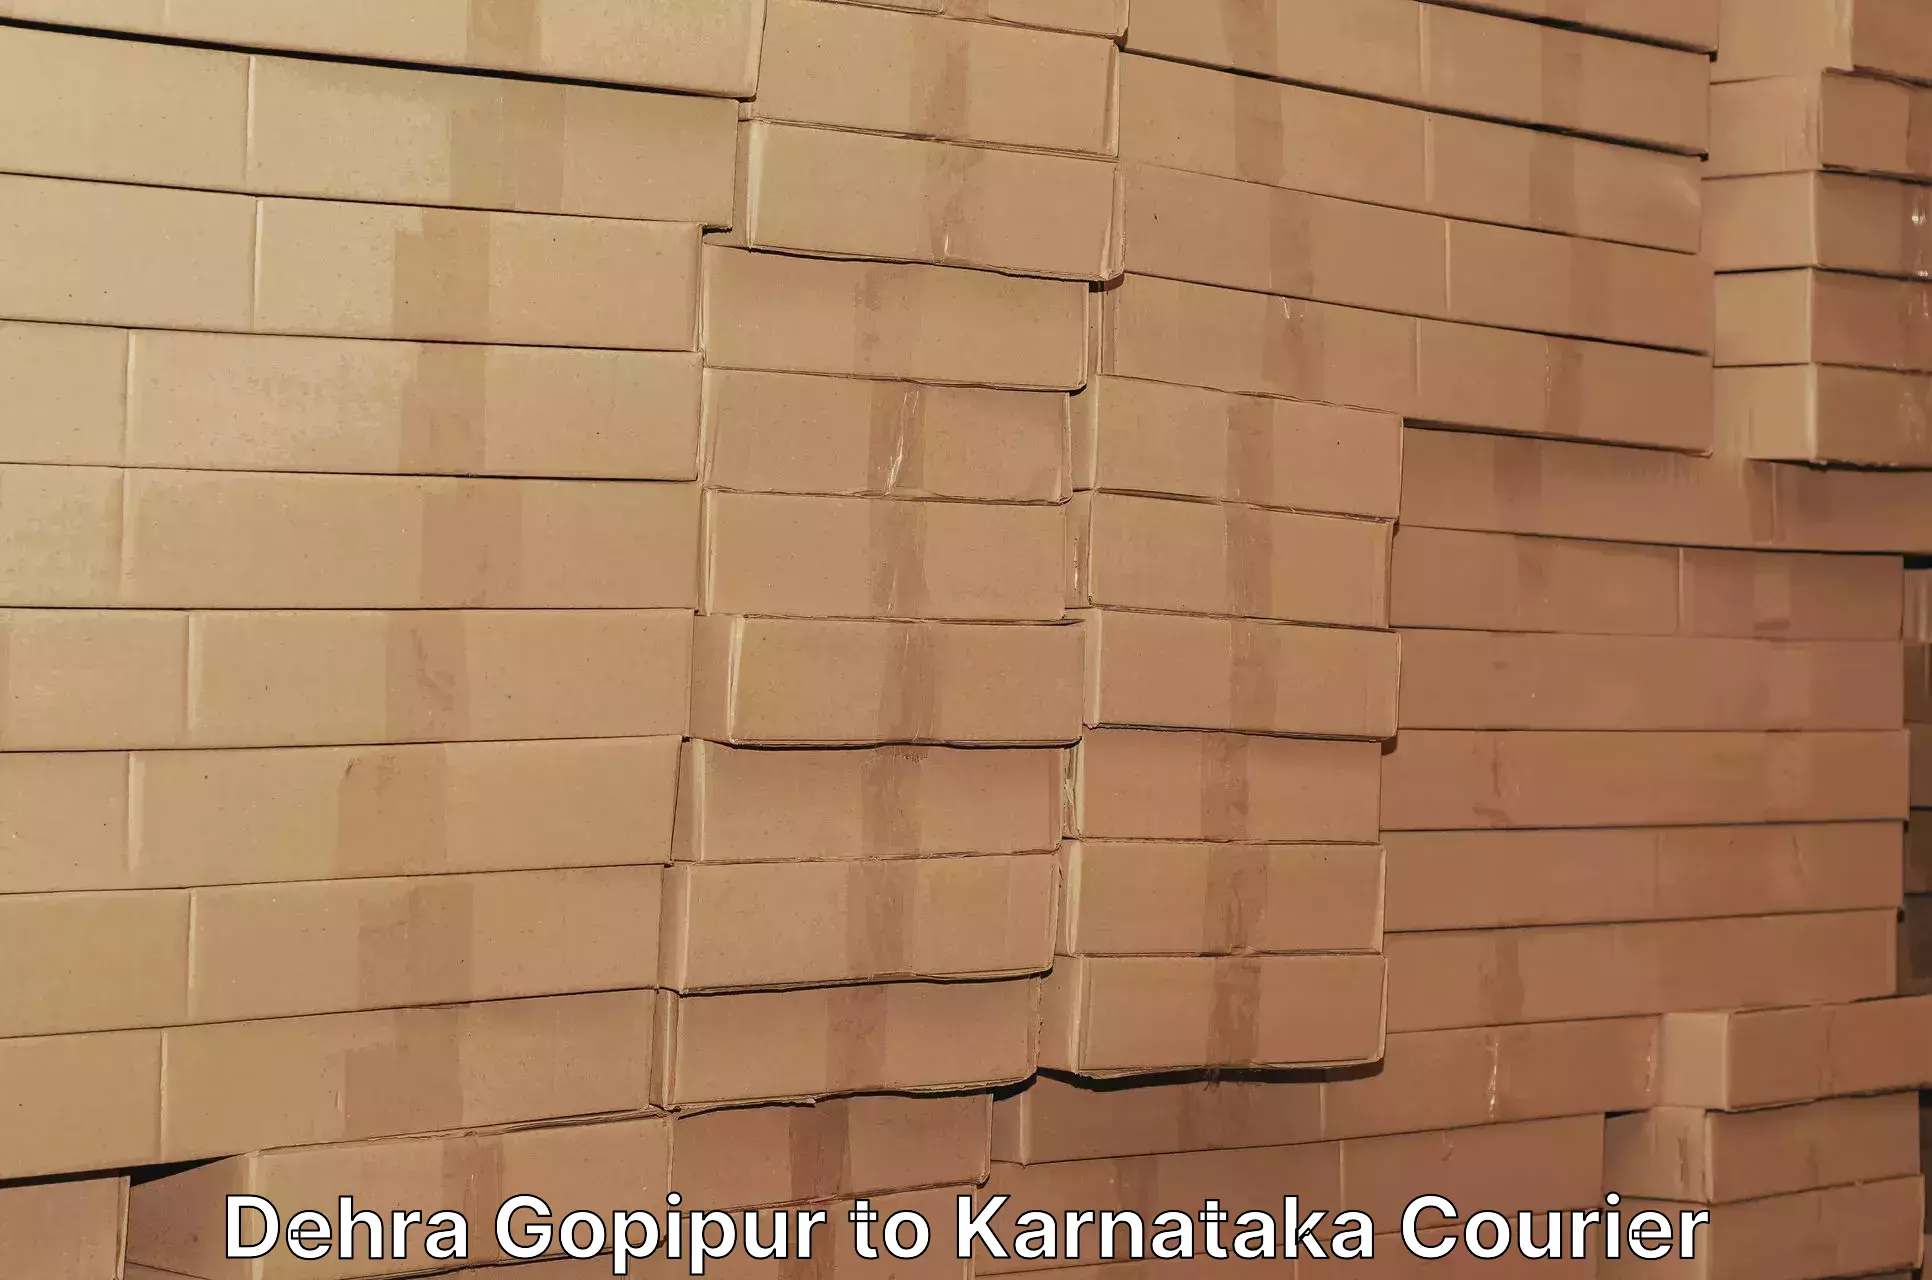 Courier service innovation Dehra Gopipur to Karnataka